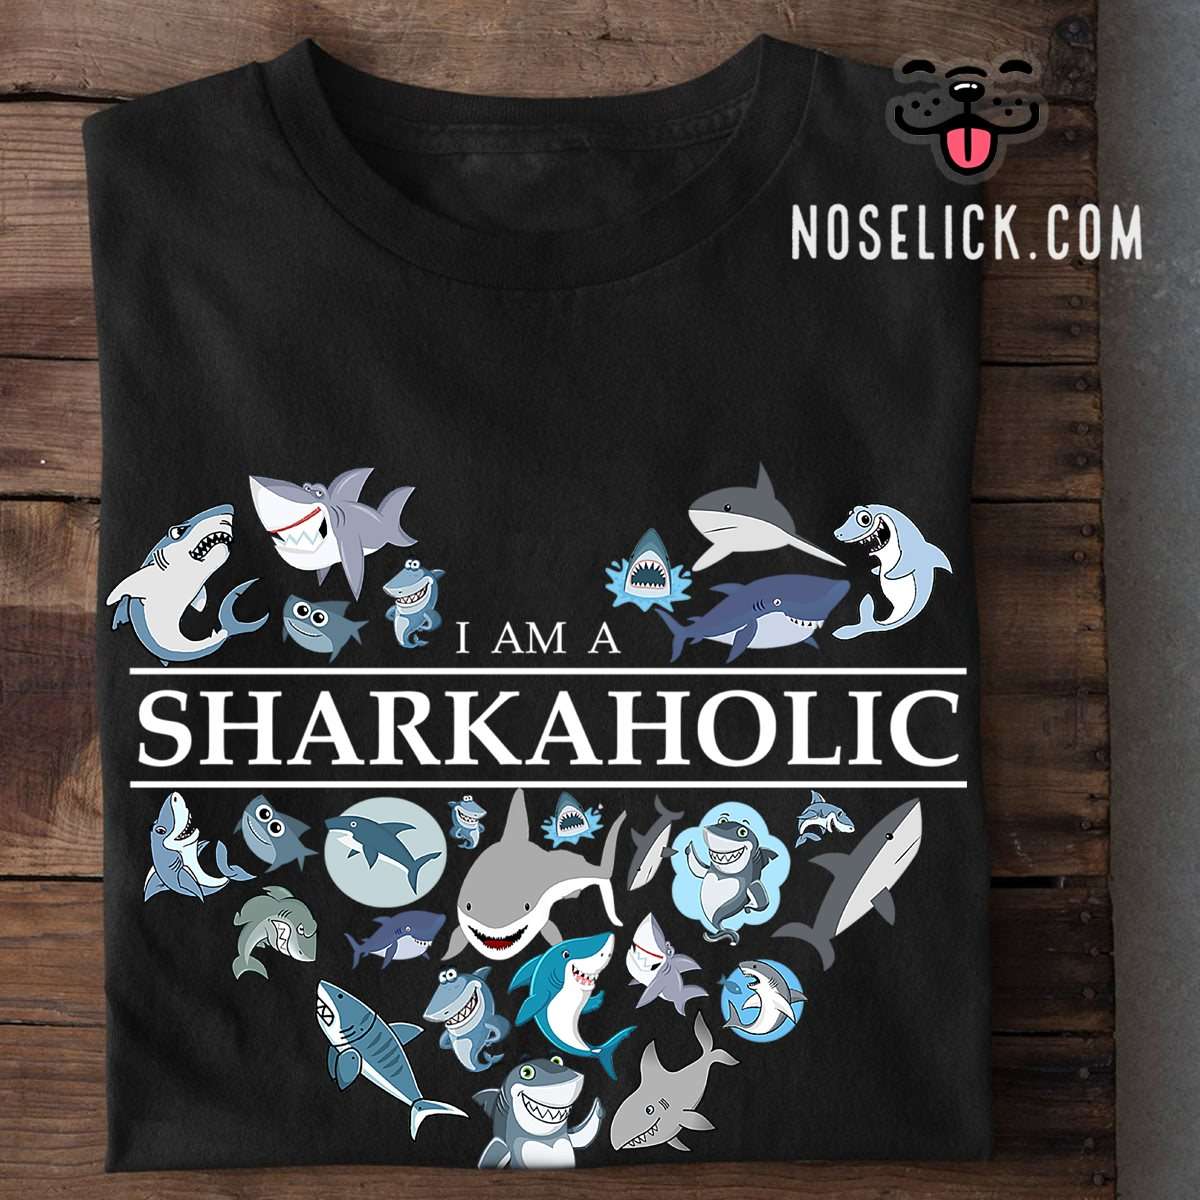 Sharkaholics